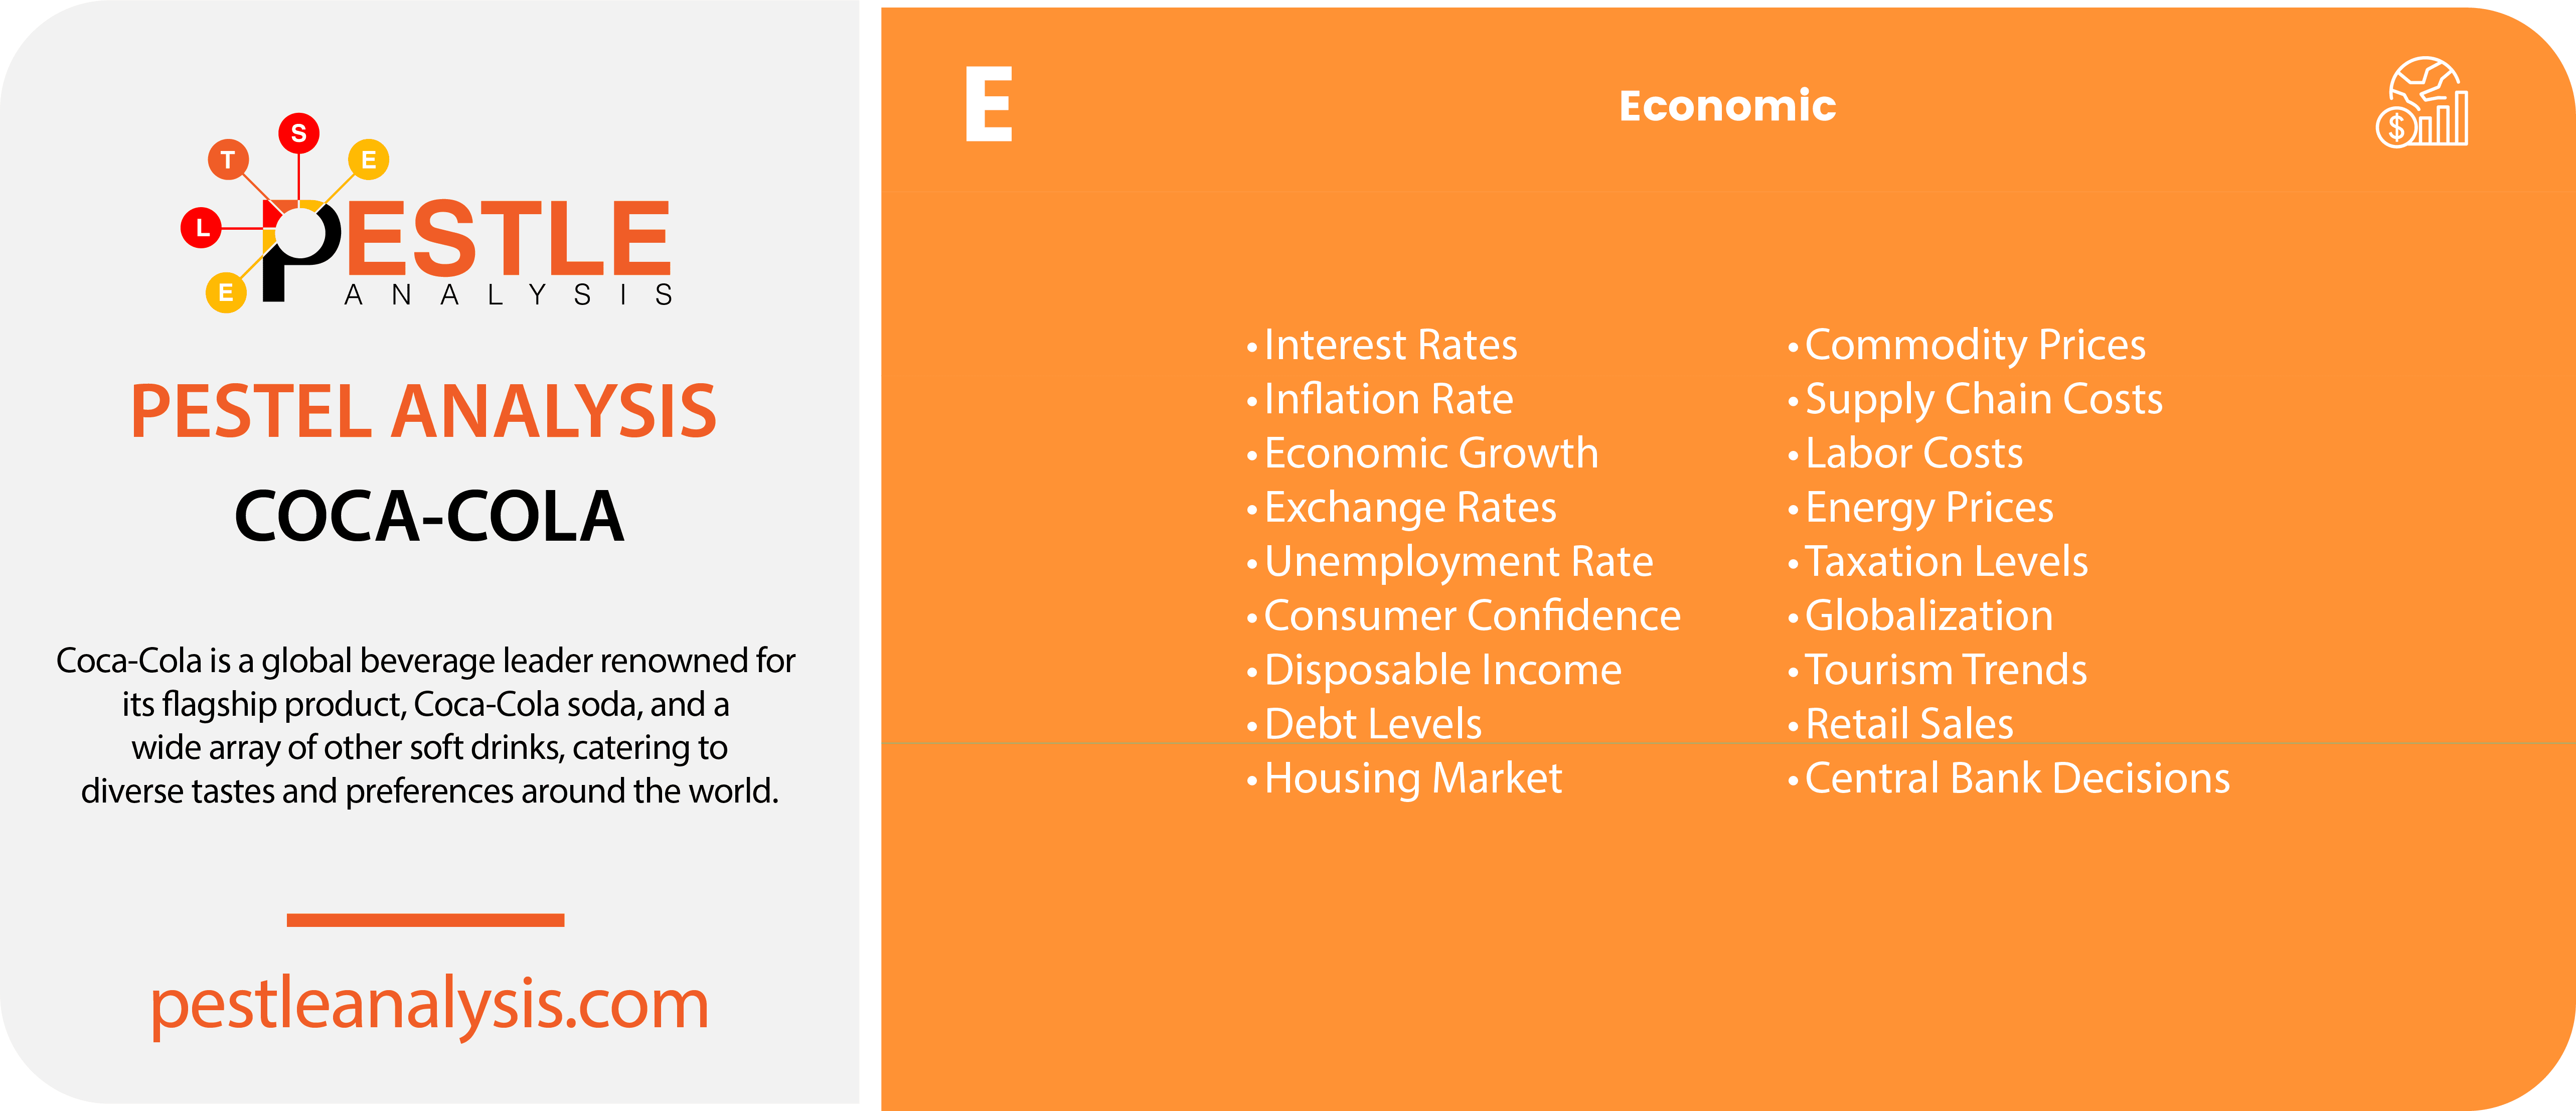 coca-cola-pestle-analysis-economic-factors-template